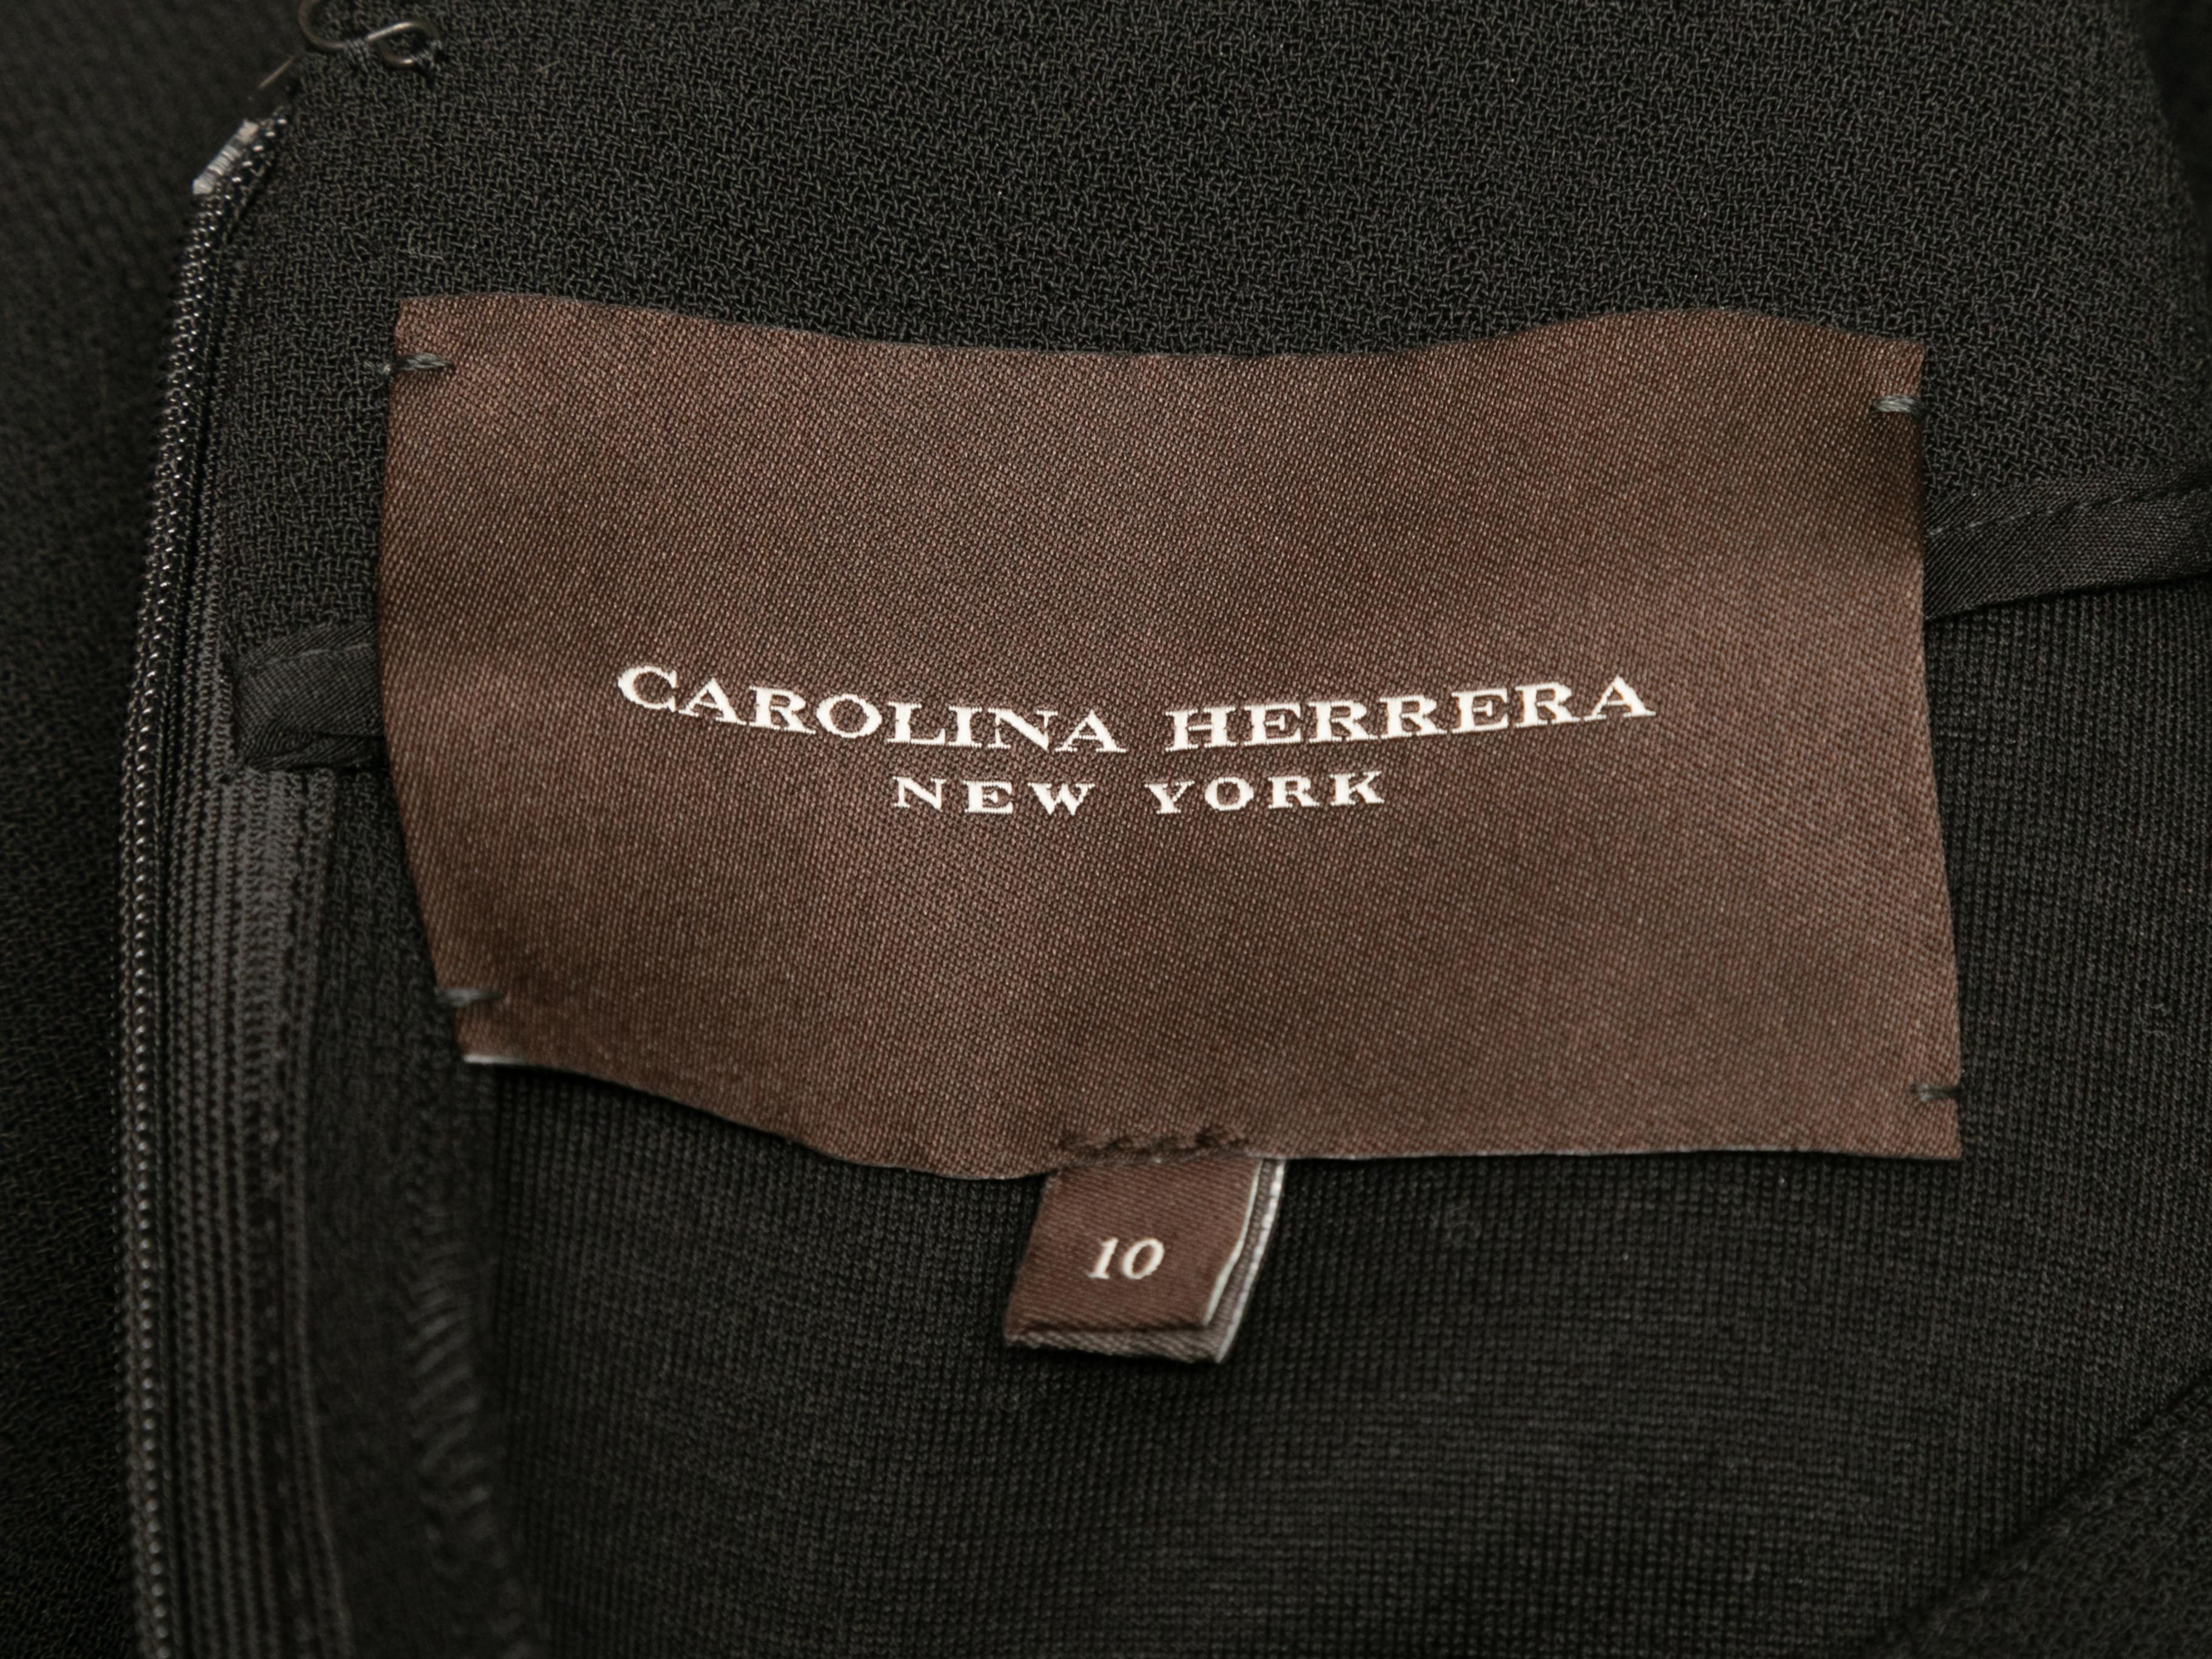 Black Carolina Herrera Virgin Wool Dress Size US 10 1